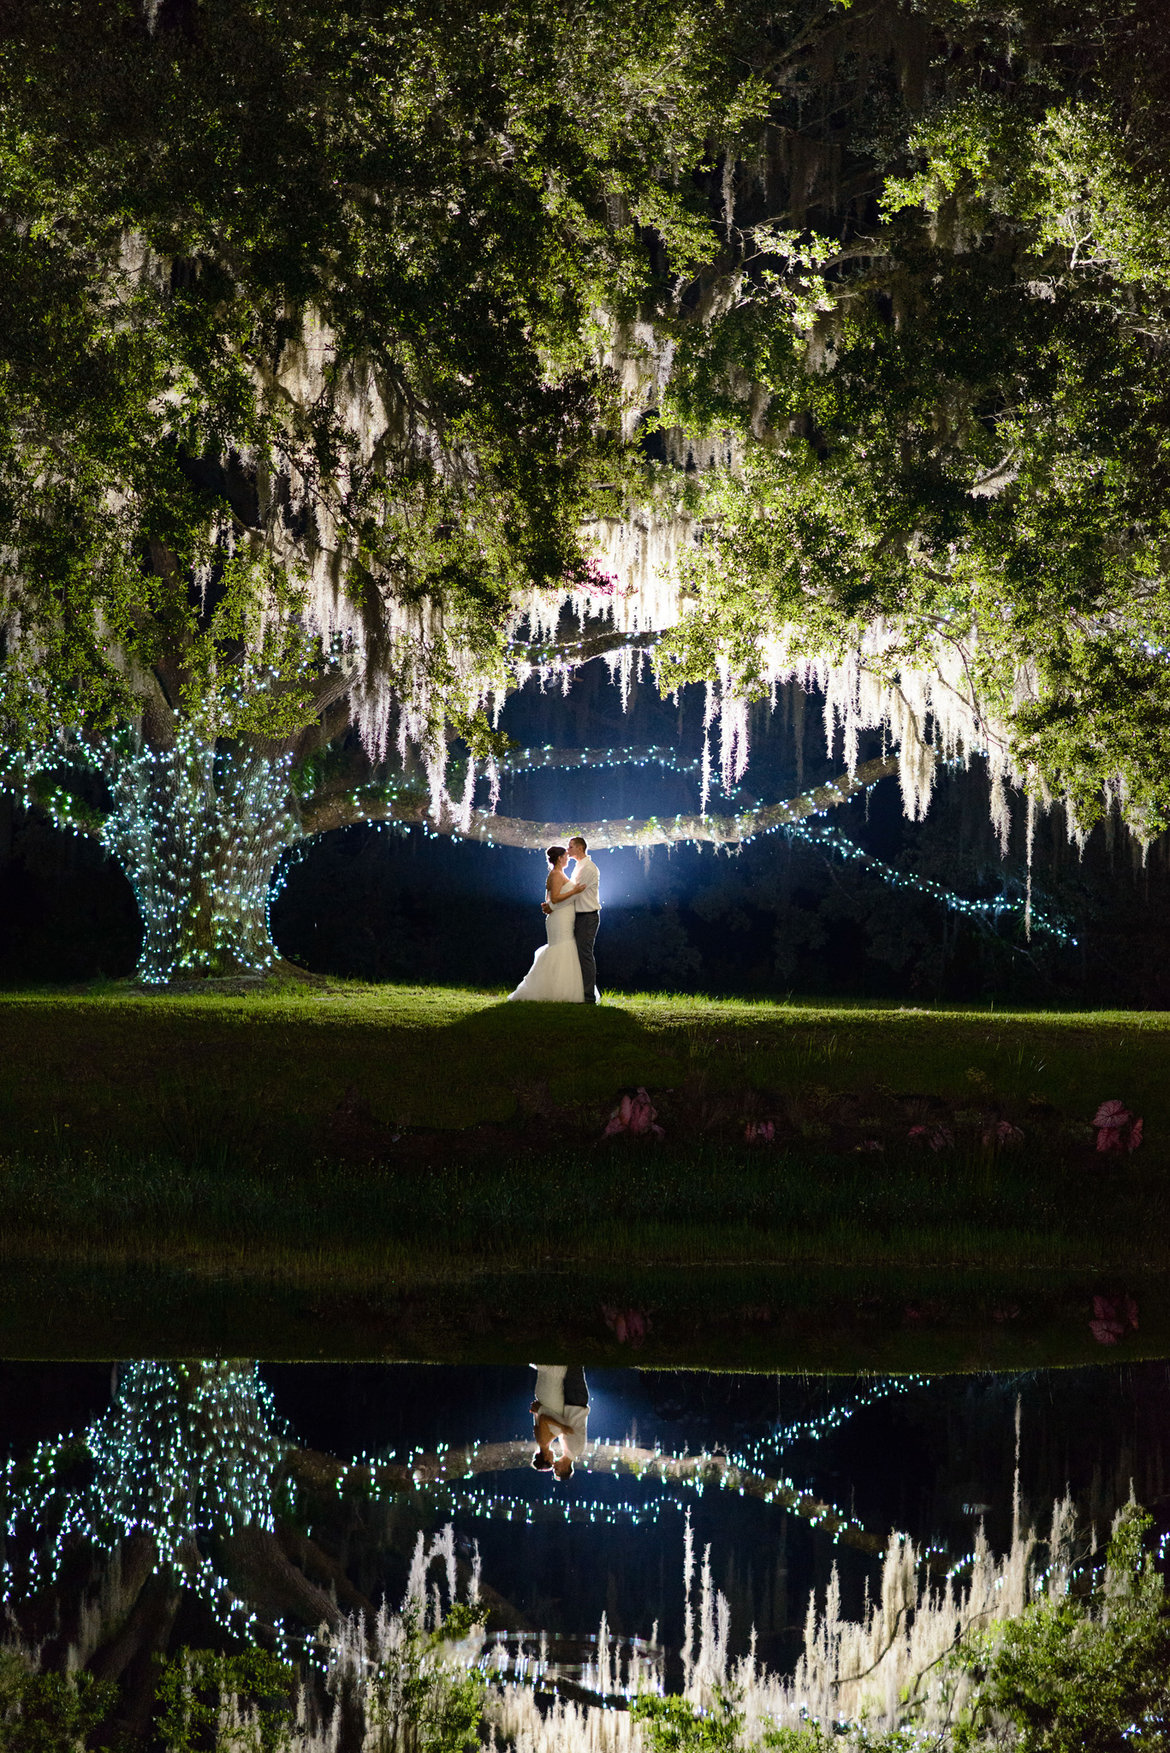 gorgeous outdoor wedding photo at night